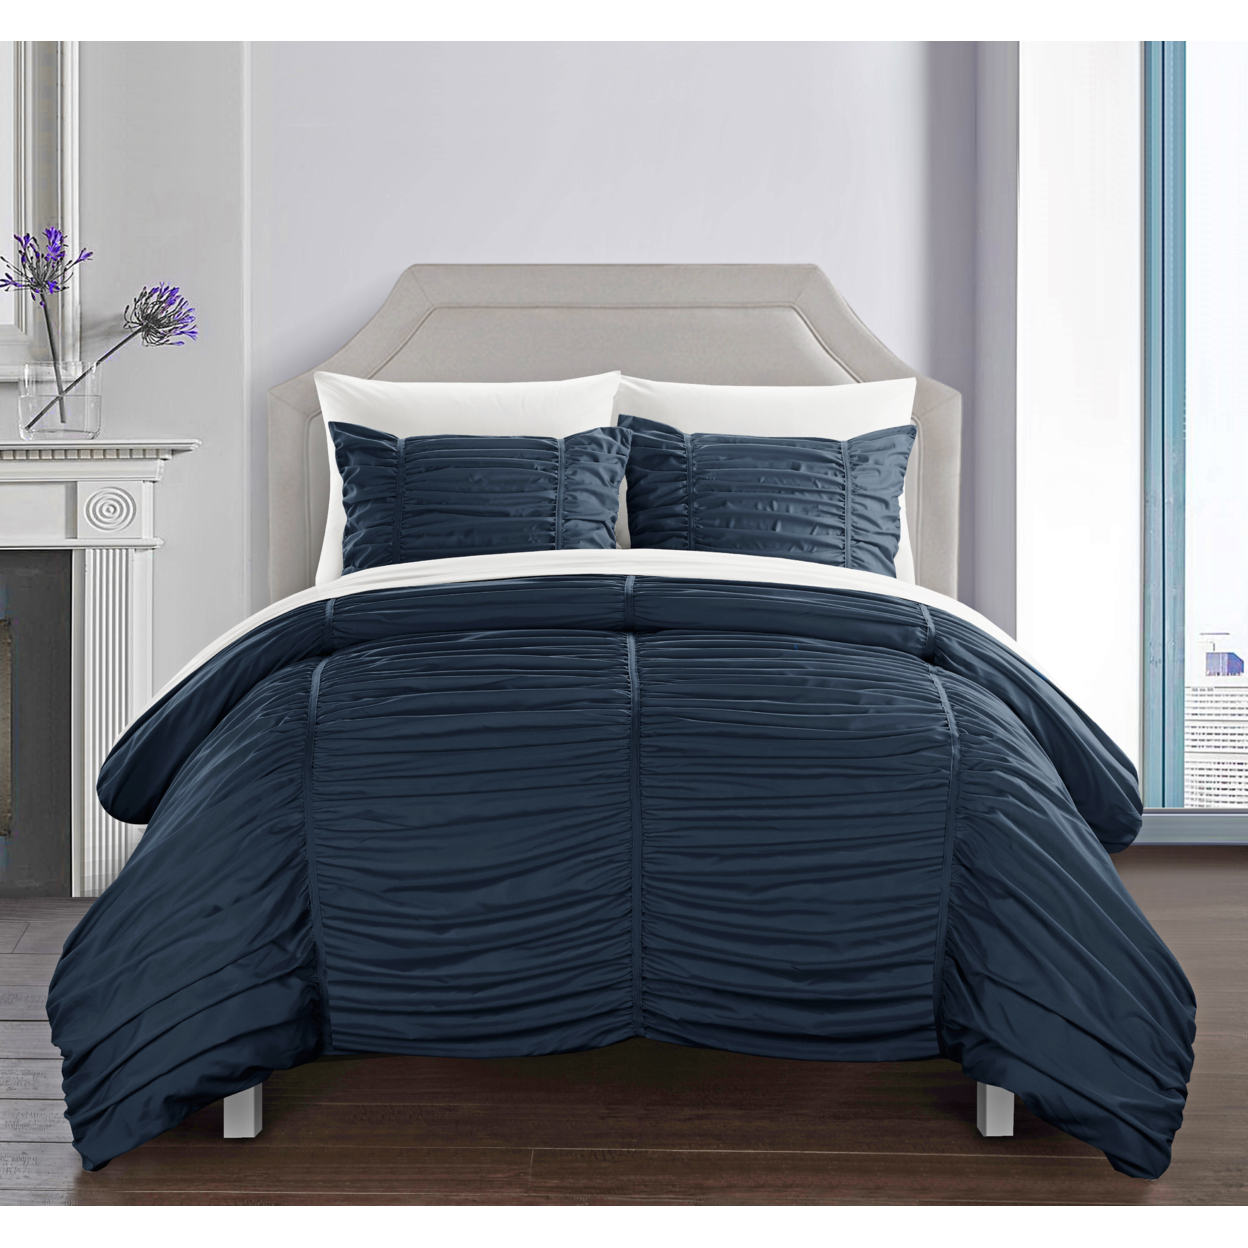 Kiela 2 Pc Or 3 Pc Ruched Comforter Set - Grey, King